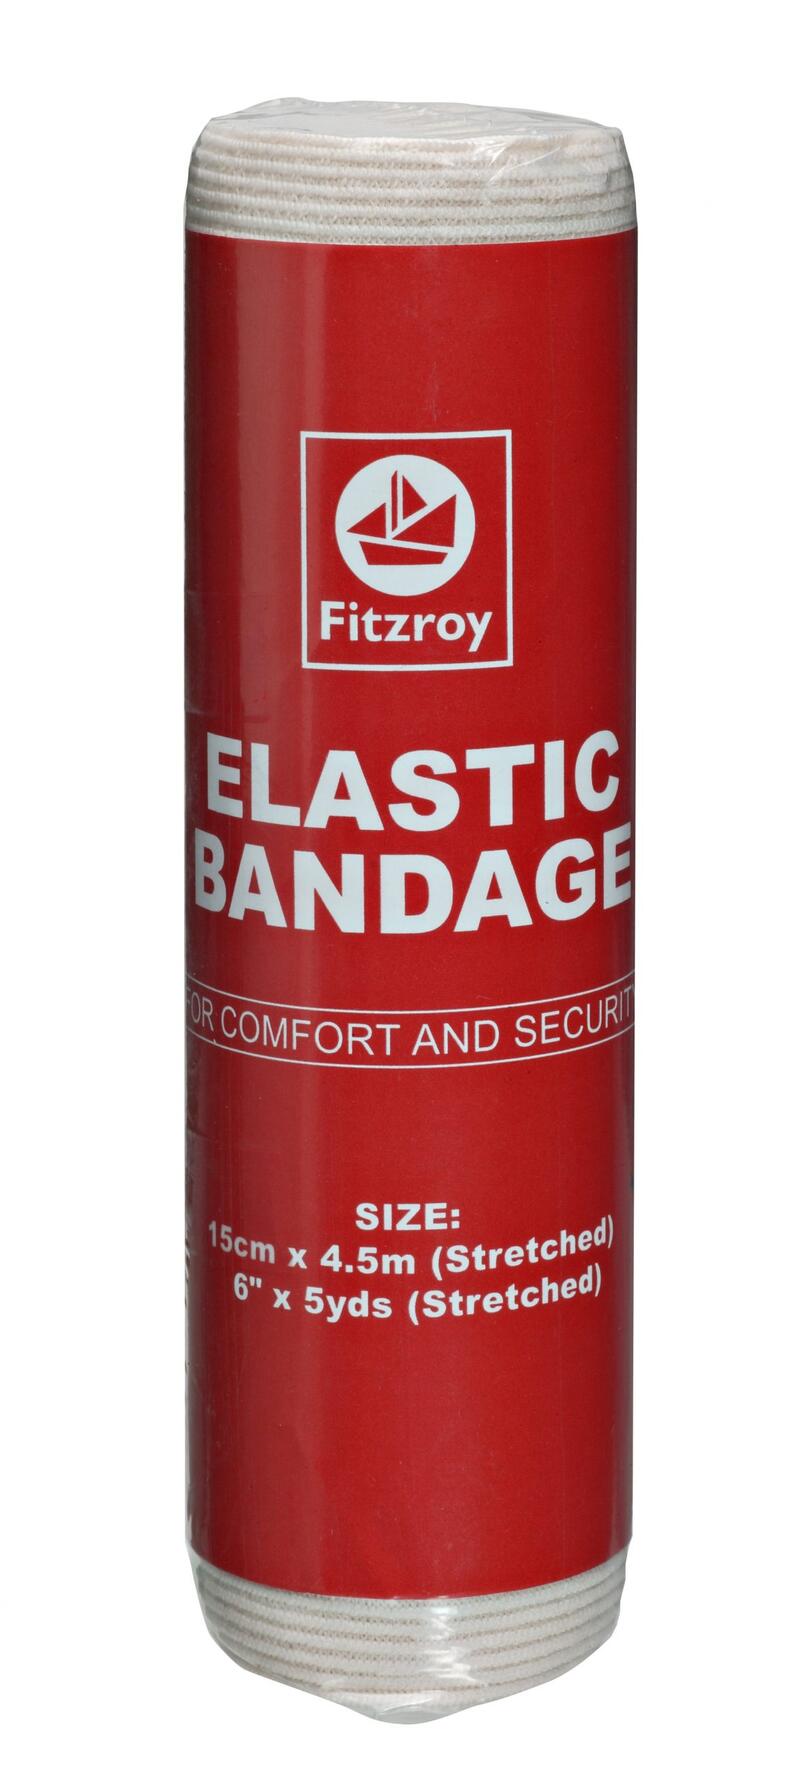 Fitzroy Elastic Bandage 15 cm X 4.5 m: $4.01